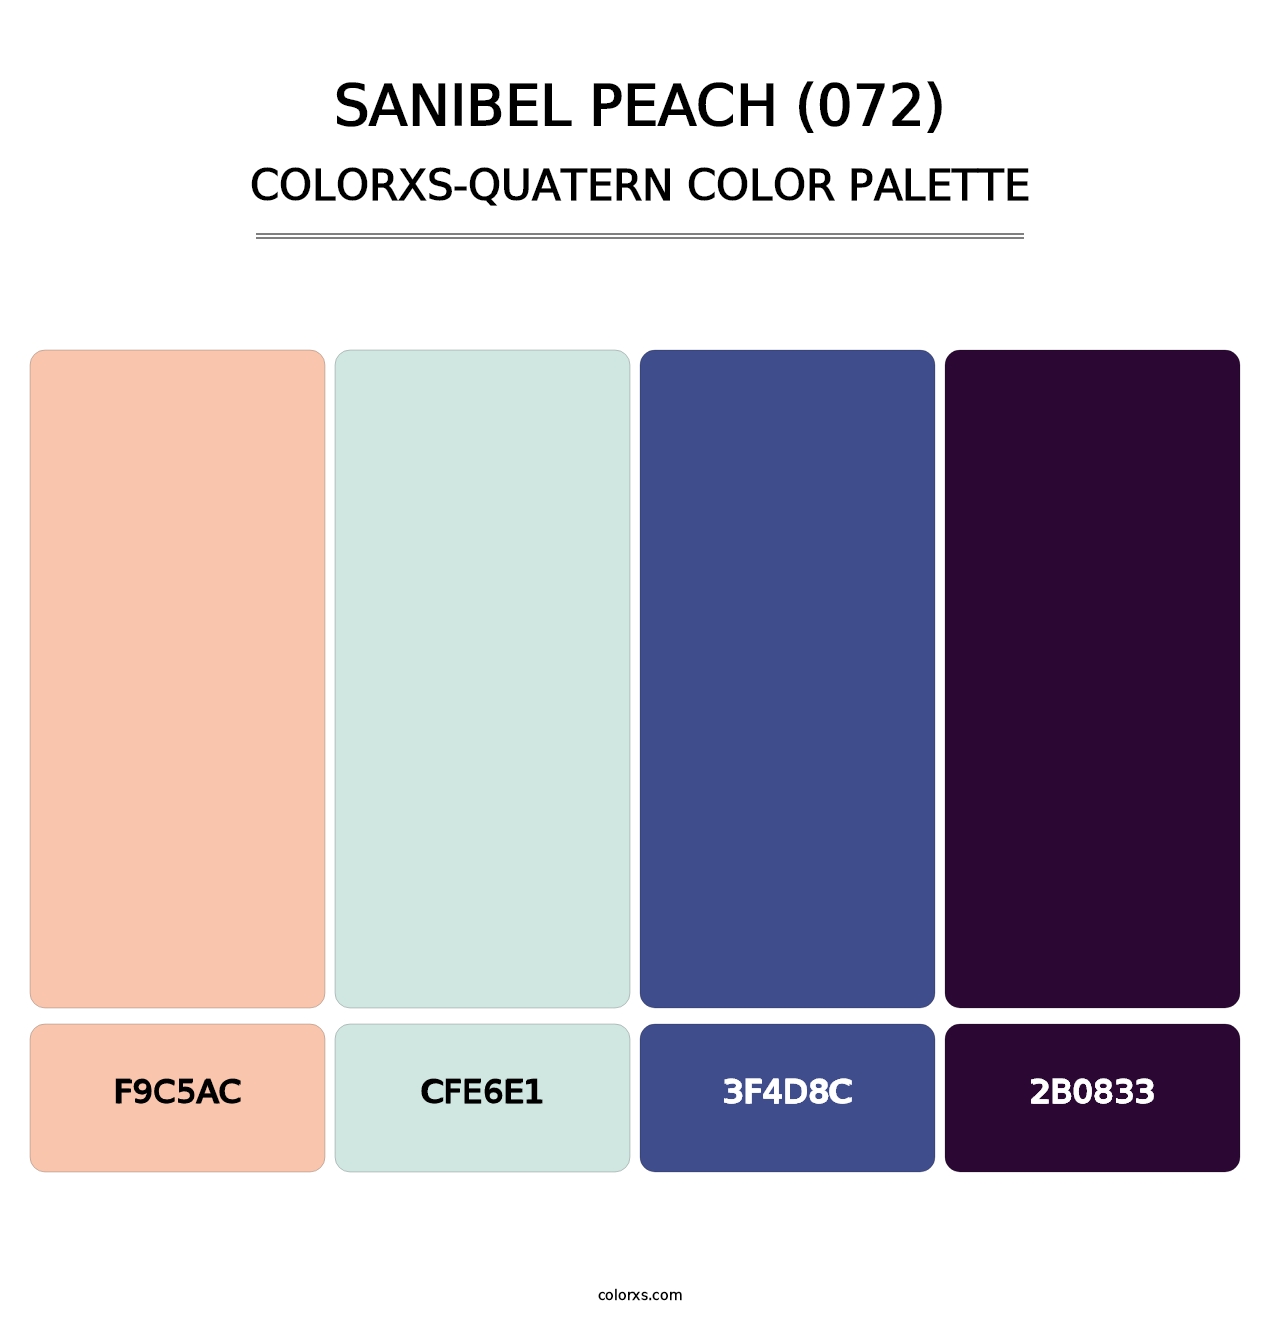 Sanibel Peach (072) - Colorxs Quatern Palette